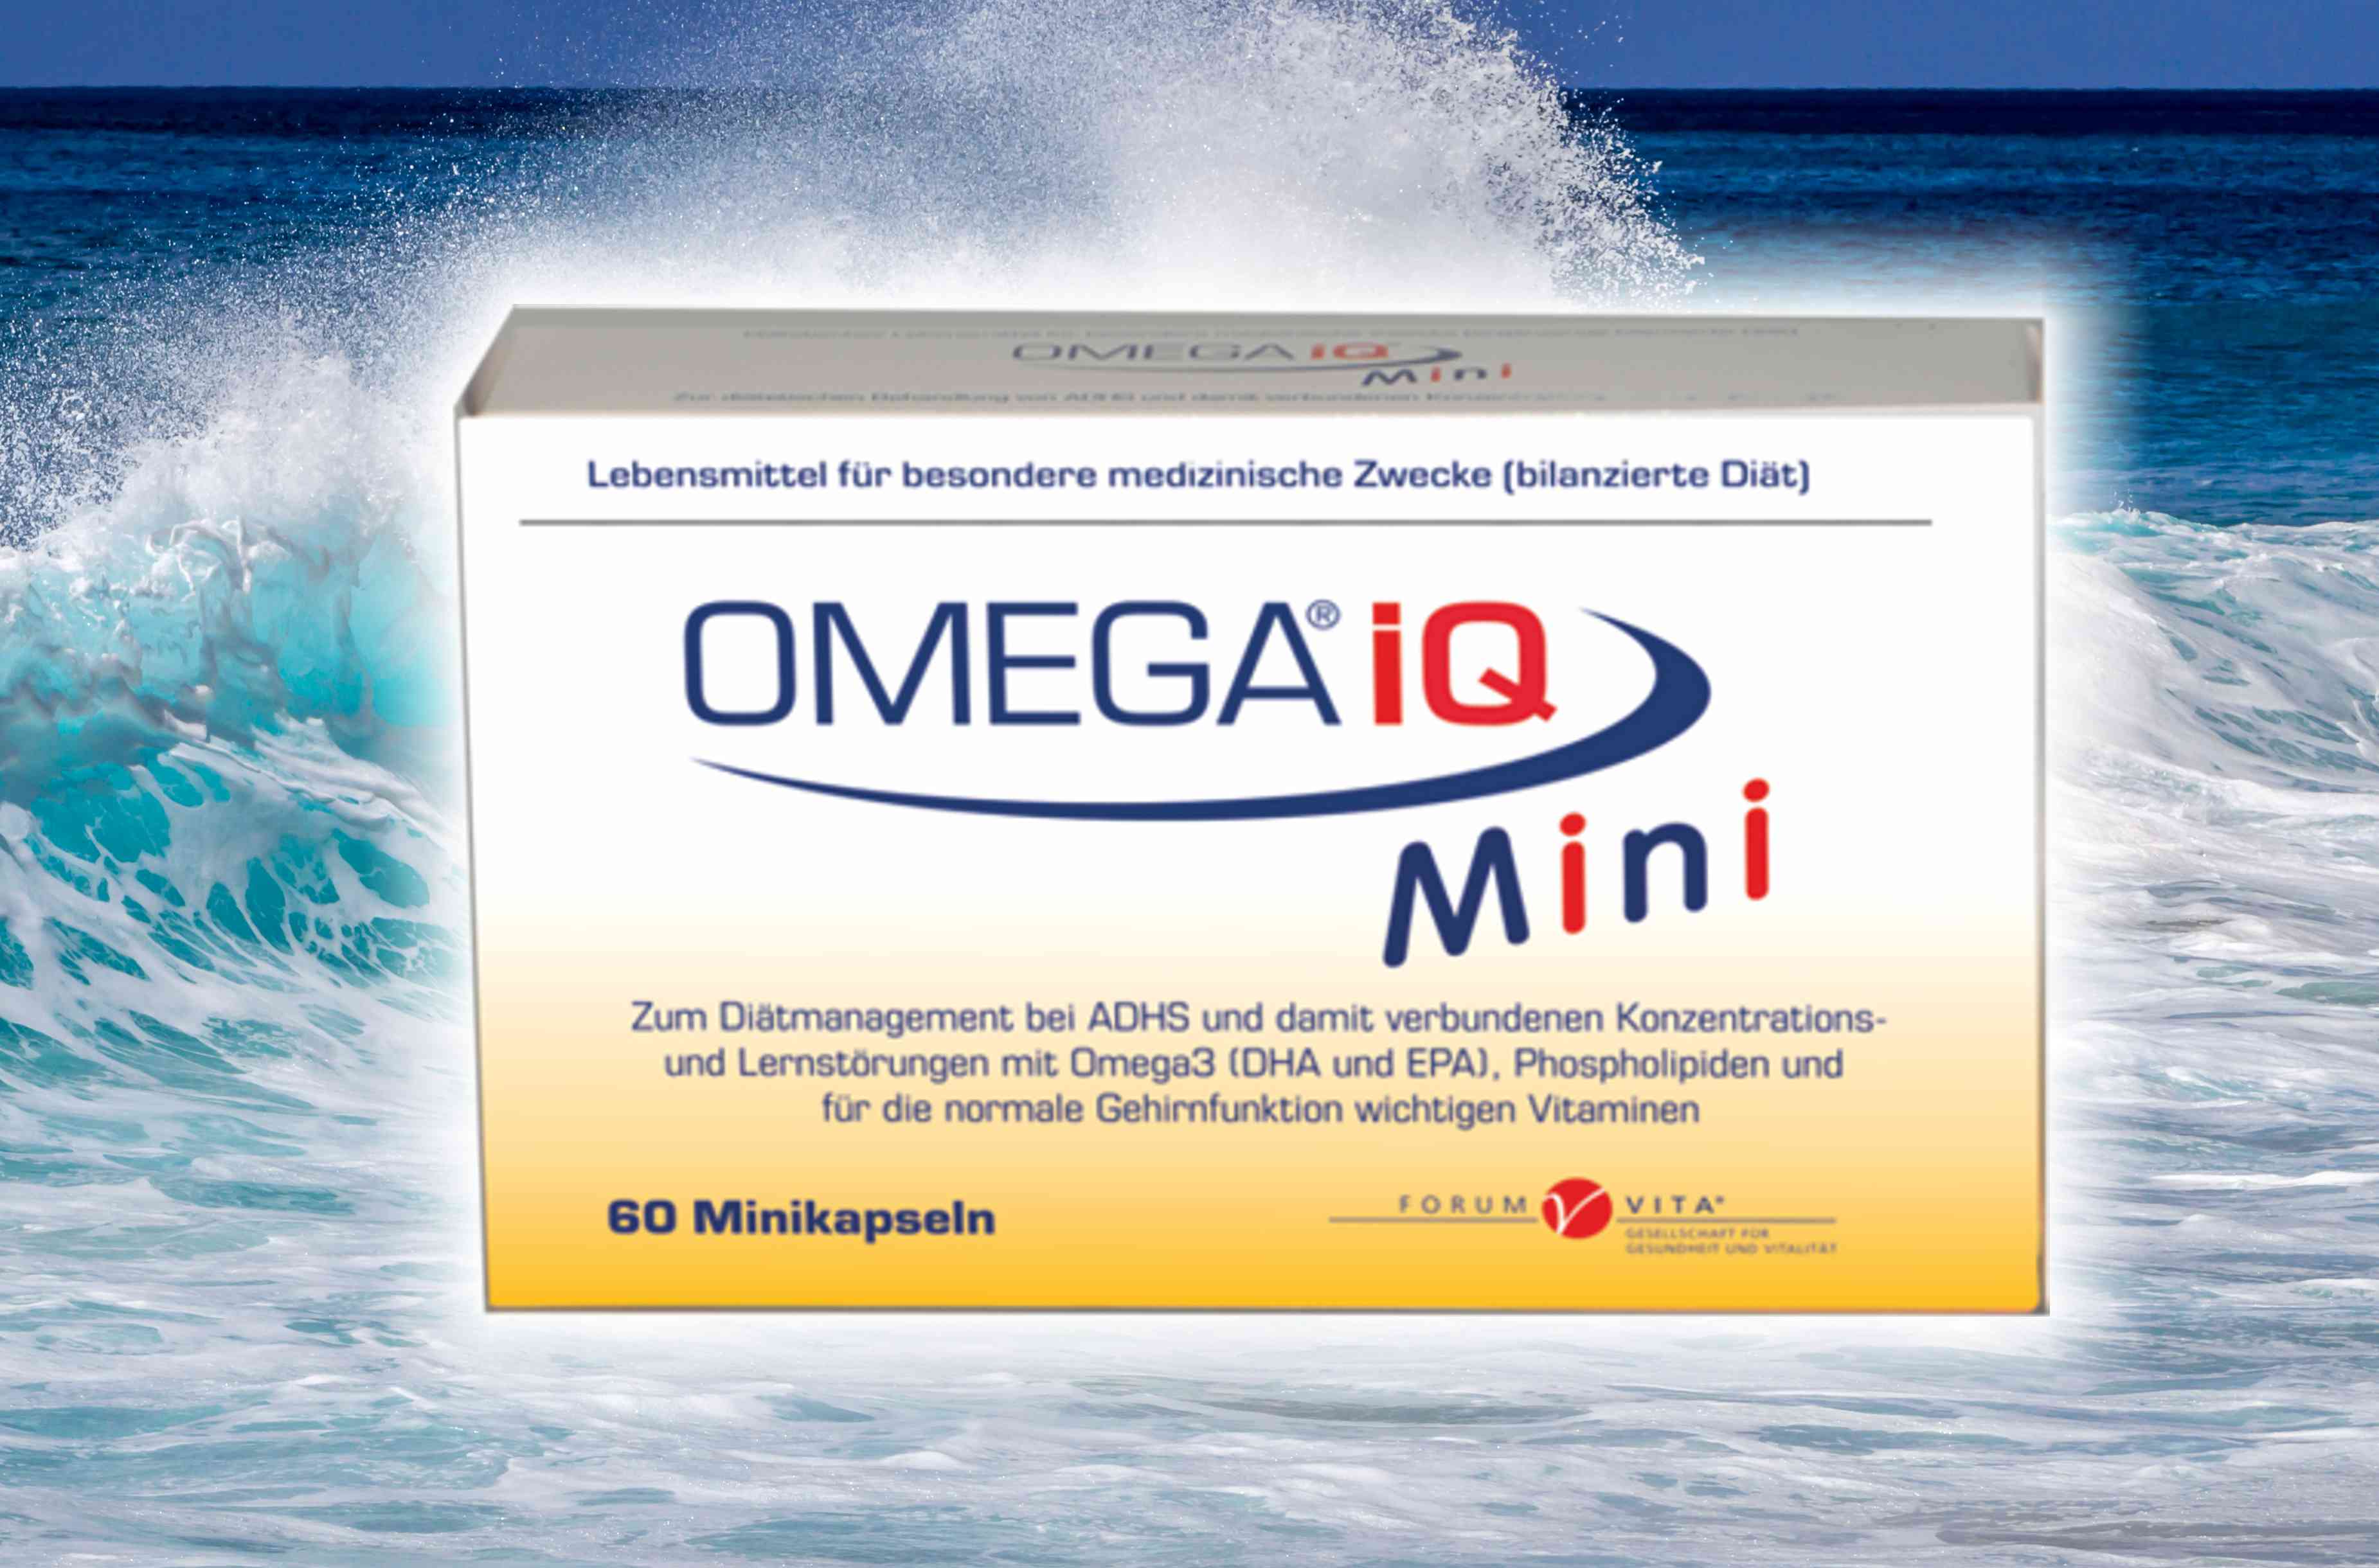 Omega iQ Mini